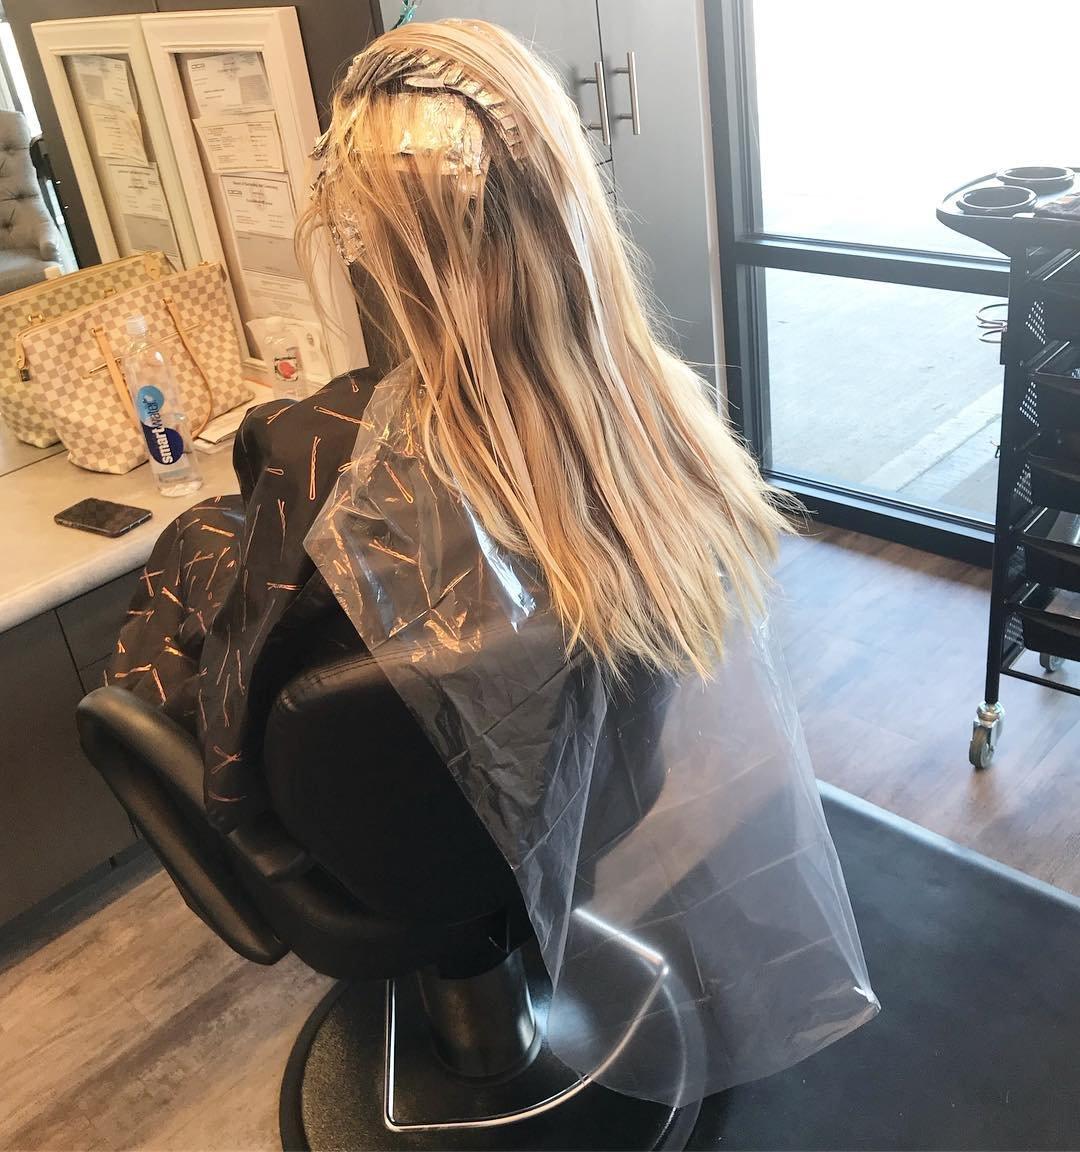 Framar Backwards Bib Disposable Capes Salon, Protects Clients, Salon Chair  & Salon Cape from Hair Dye